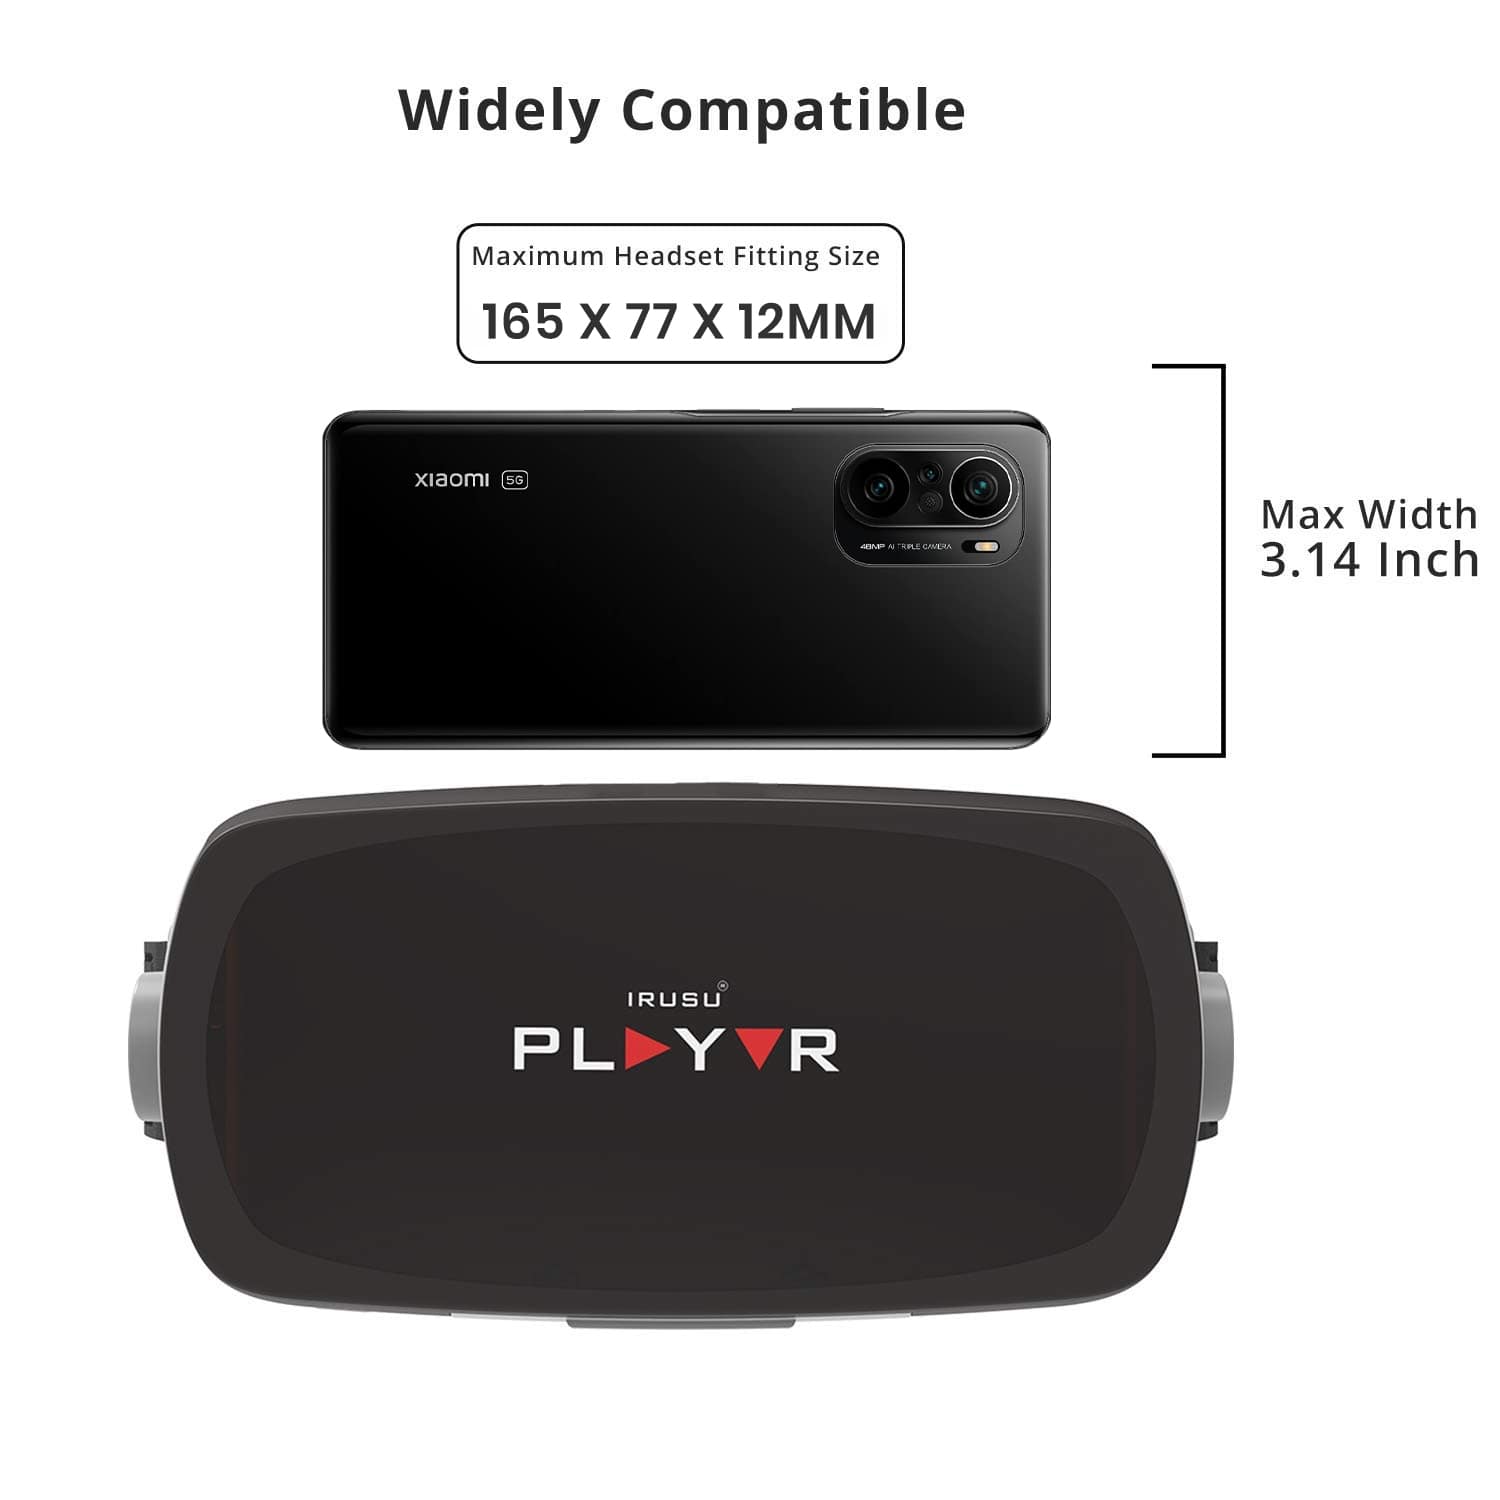 Irusu play VR compatibility